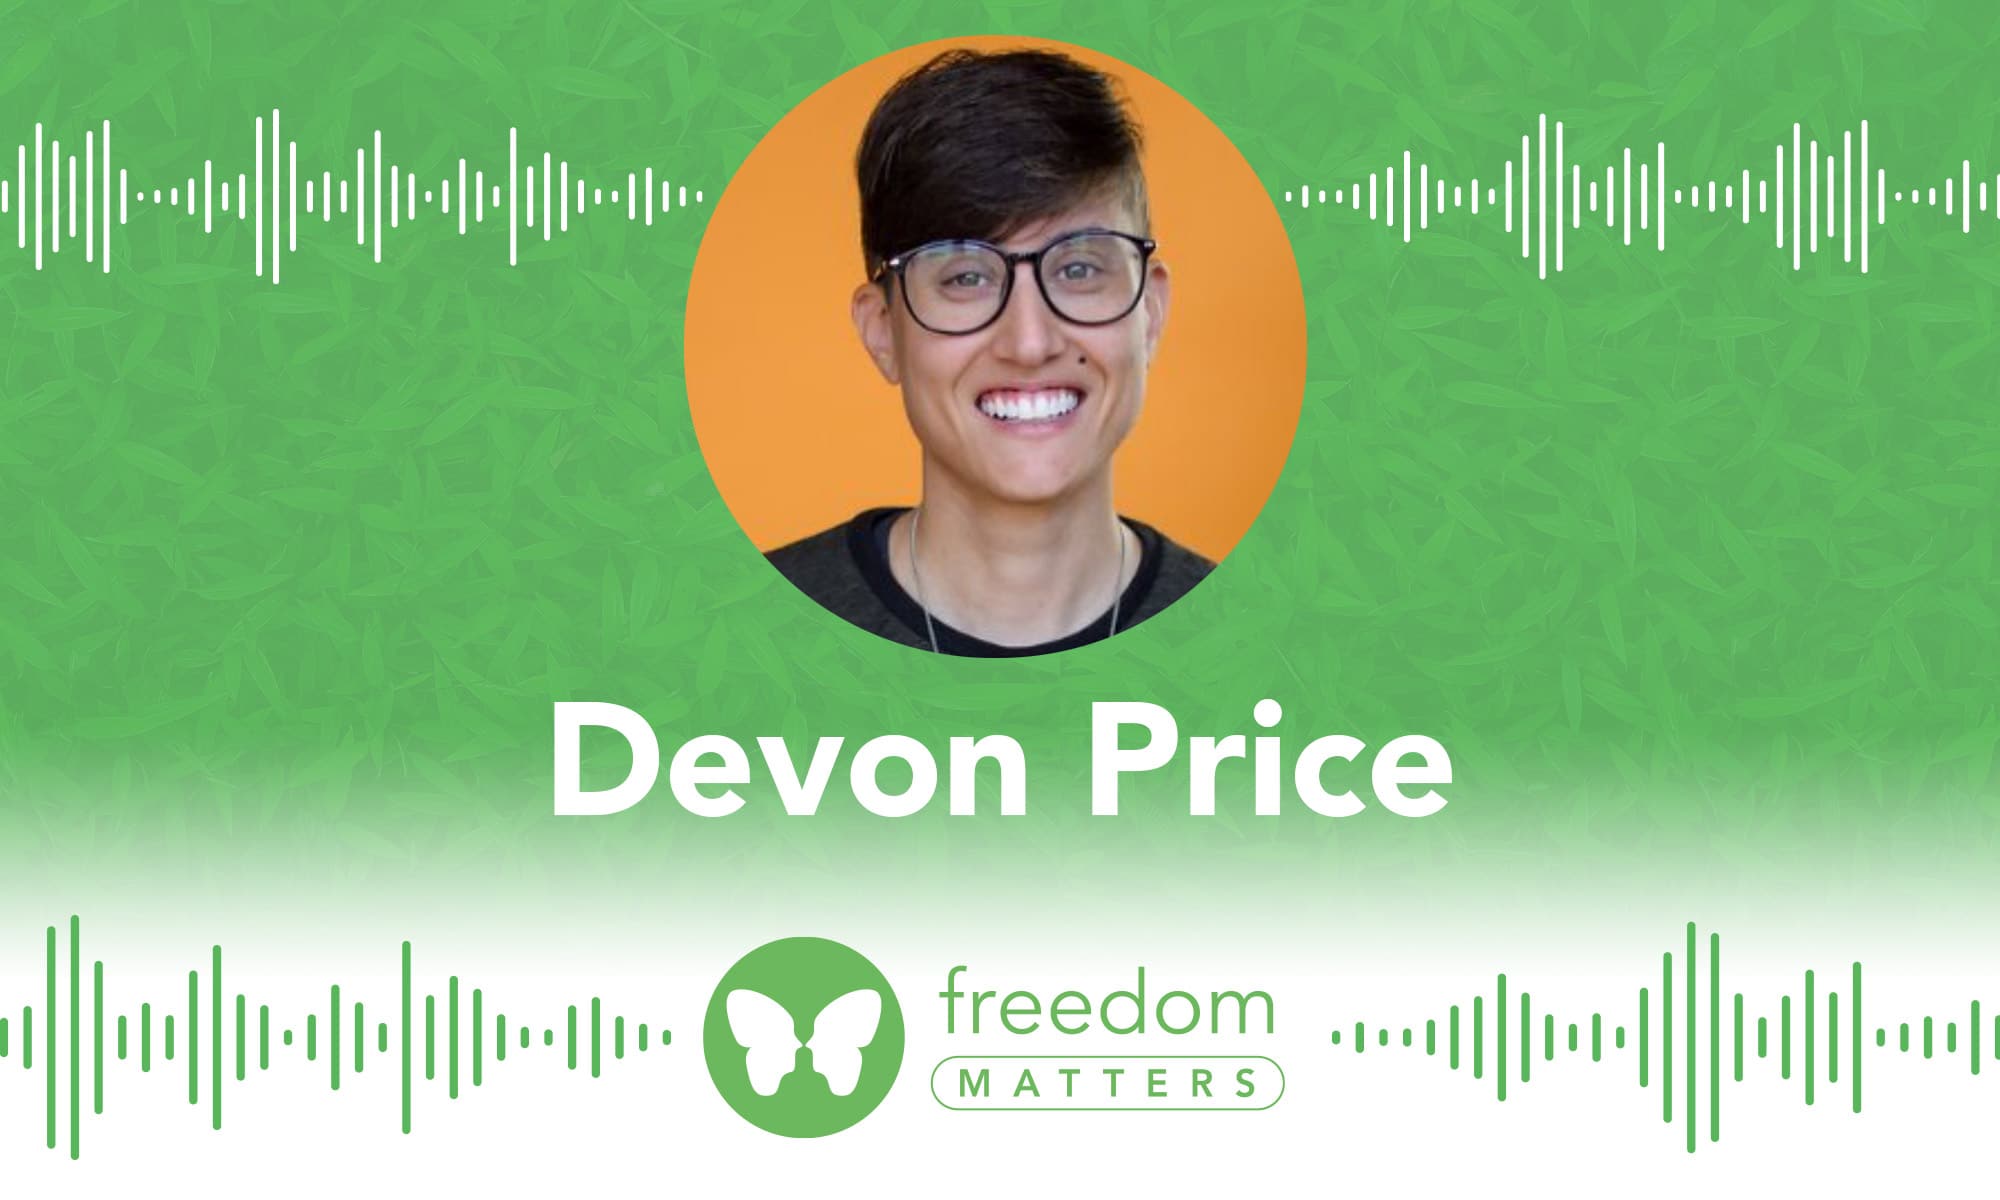 Devon Price Freedom Matters podcast